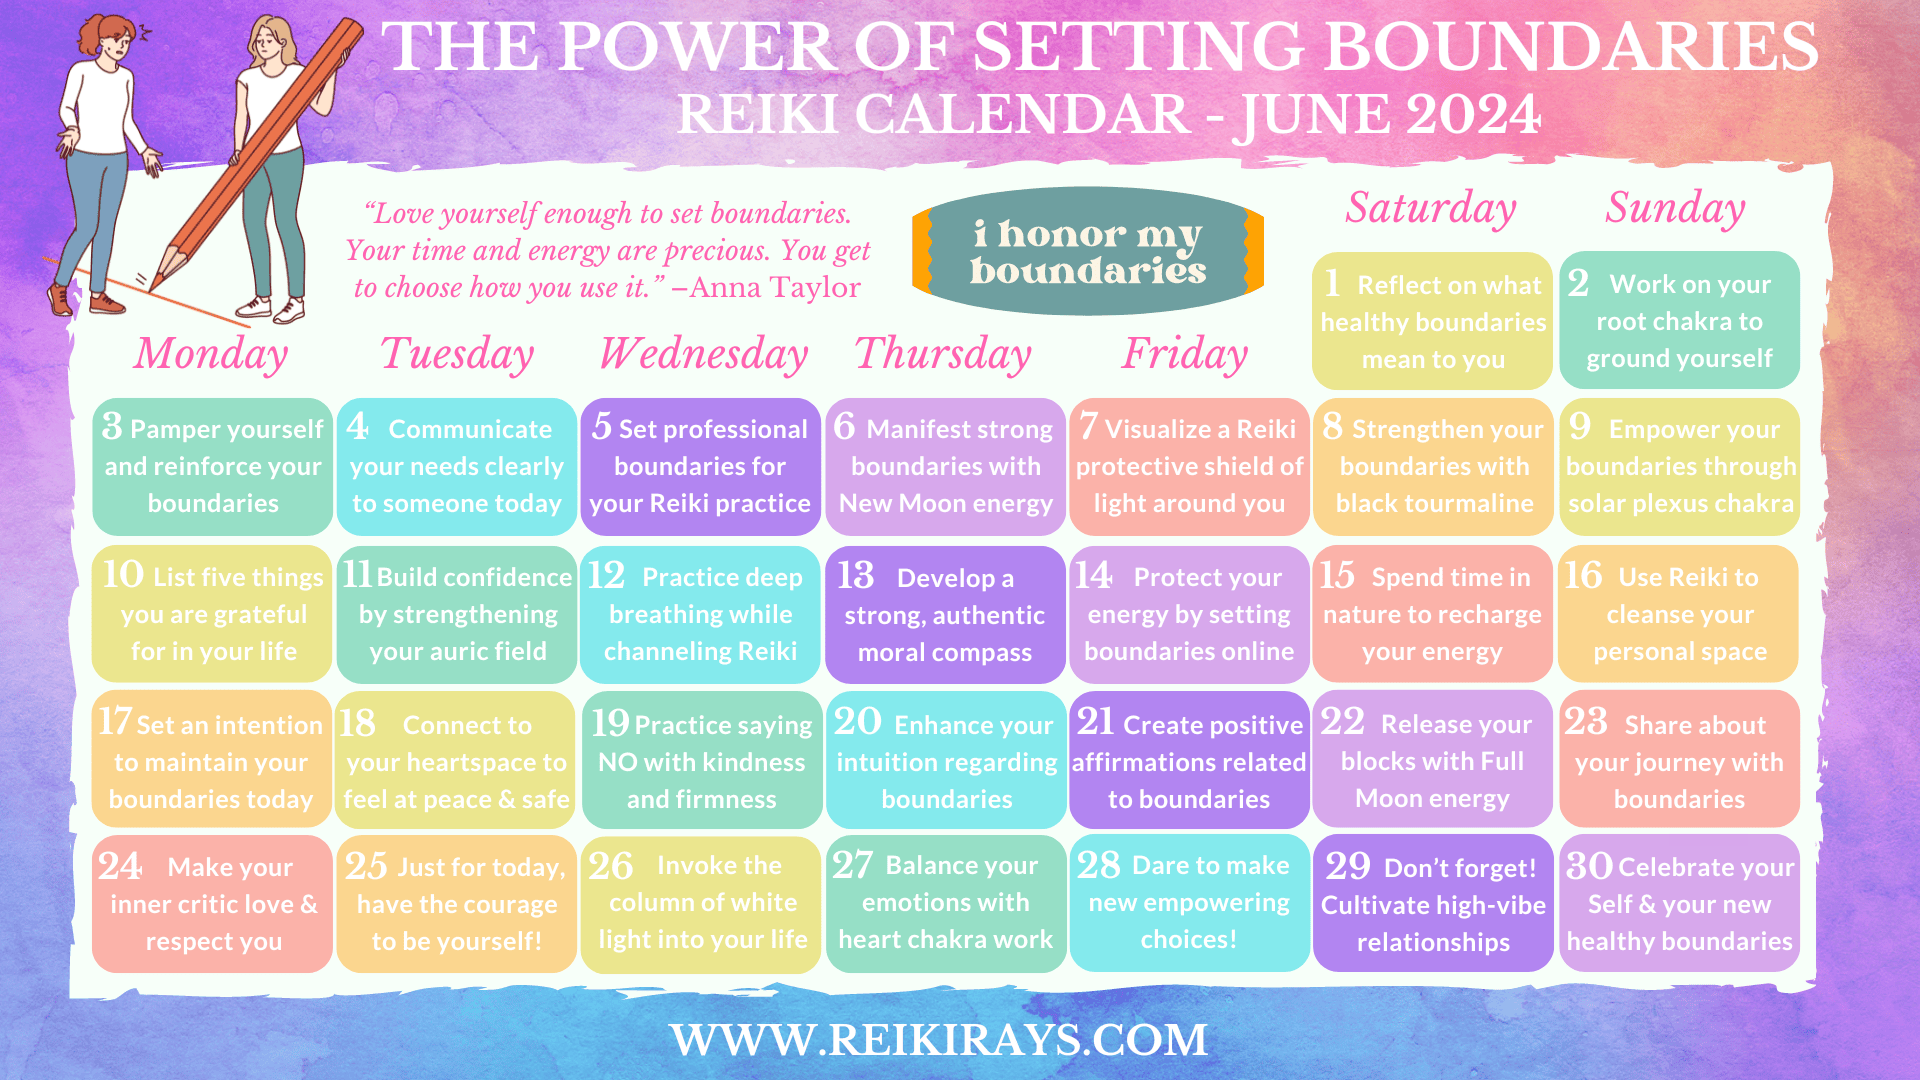 The Power of Setting Boundaries - Reiki Calendar June 2024